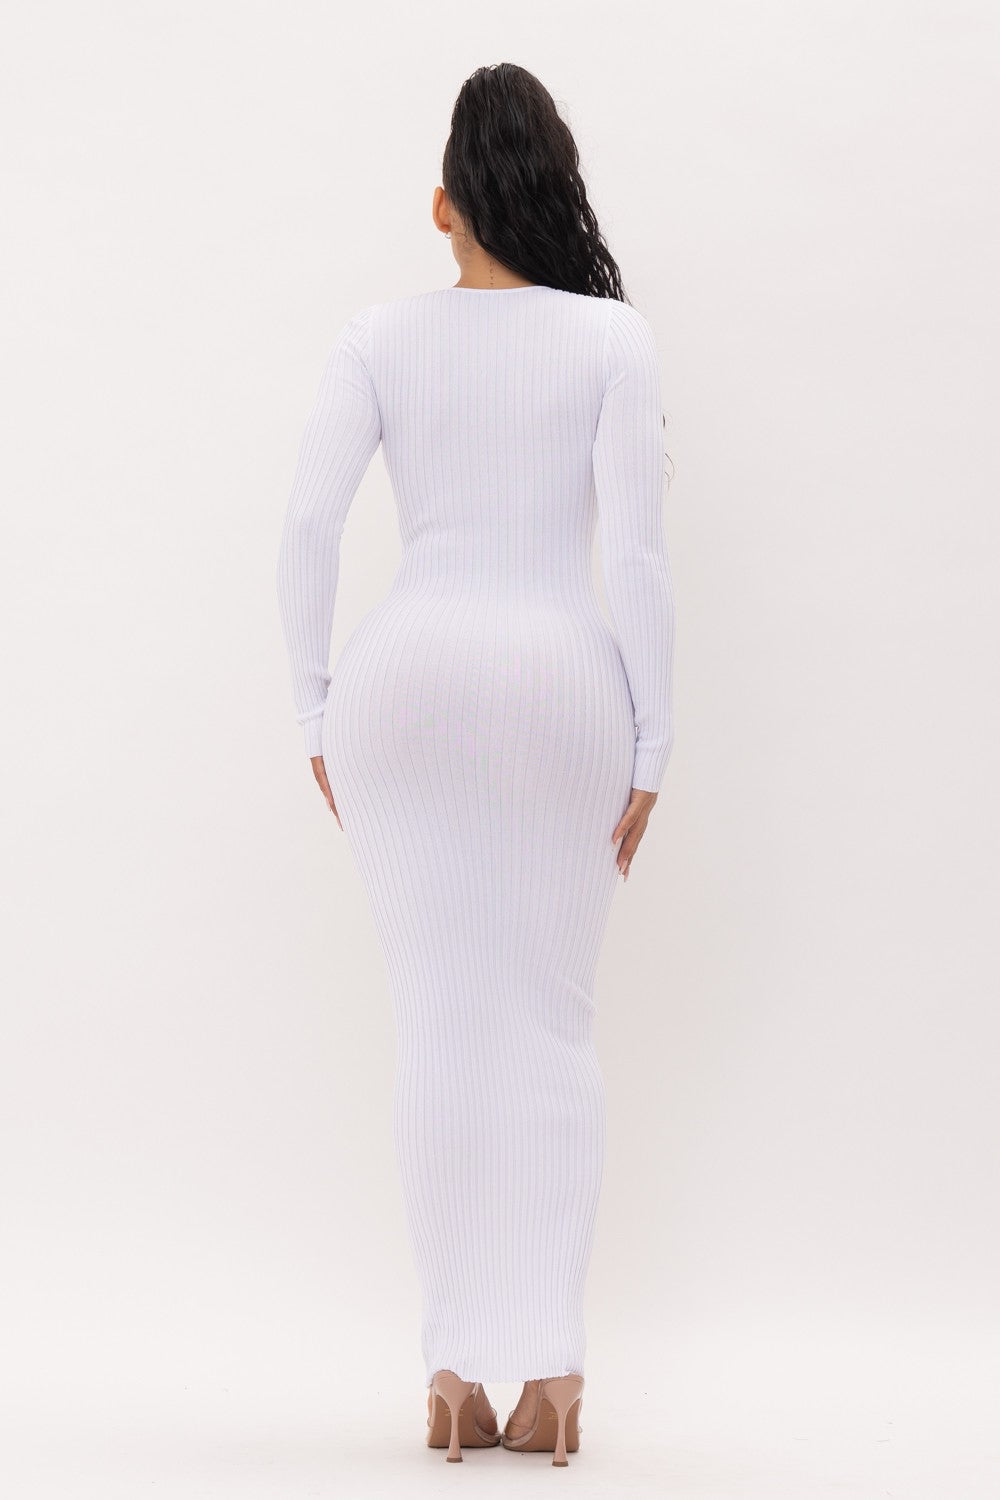 Regalito Dress - White